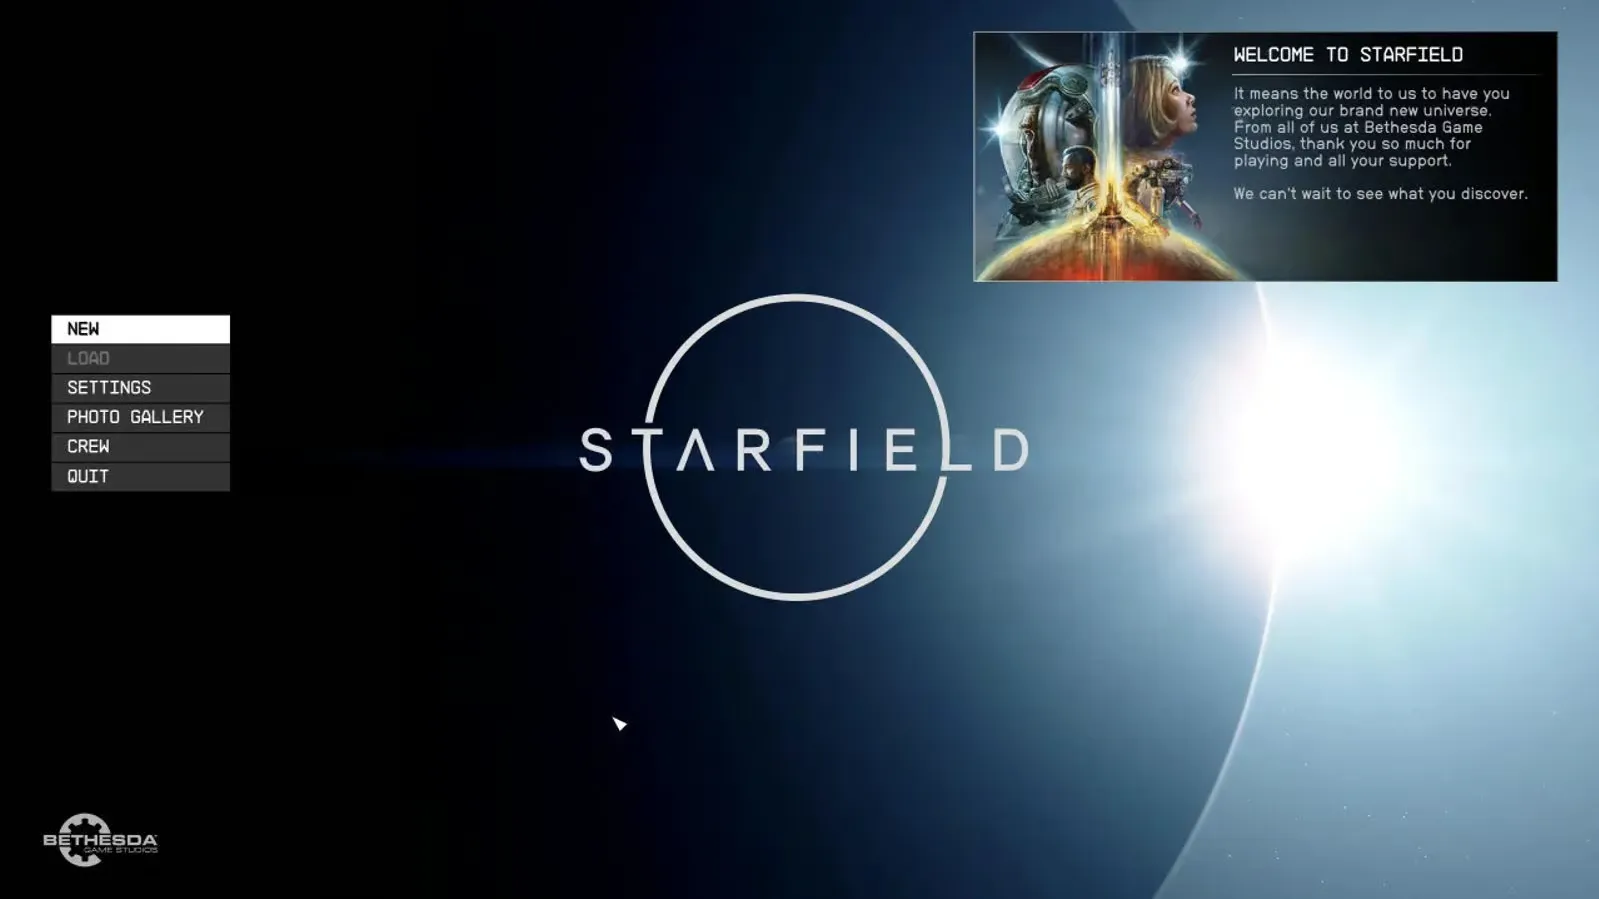 Starfield title screen